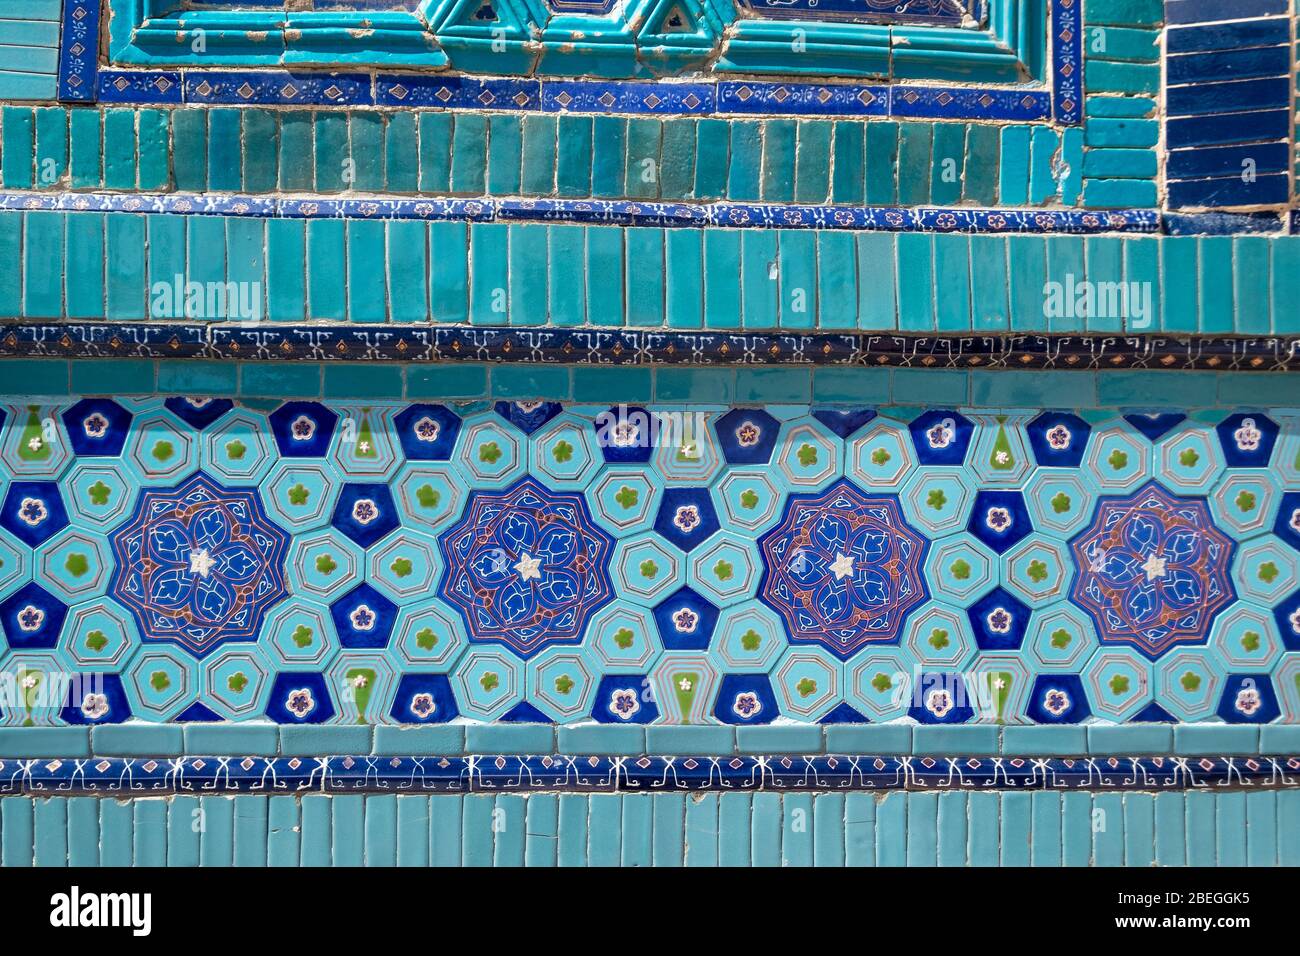 Die Nekropole Shah-i-Zinda, Samarkand, Usbekistan Stockfoto